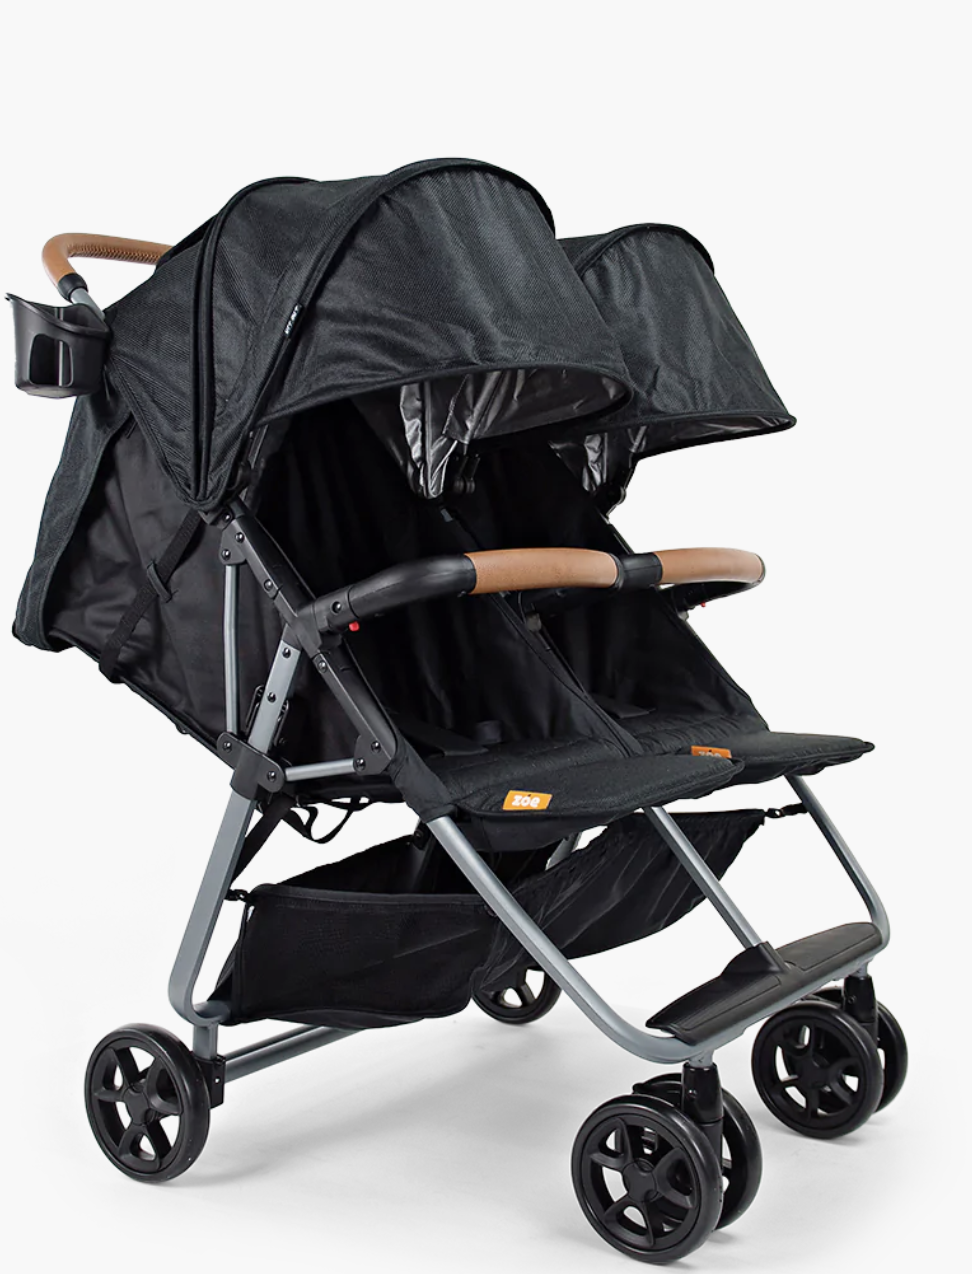 Lightweight the twin travel stroller